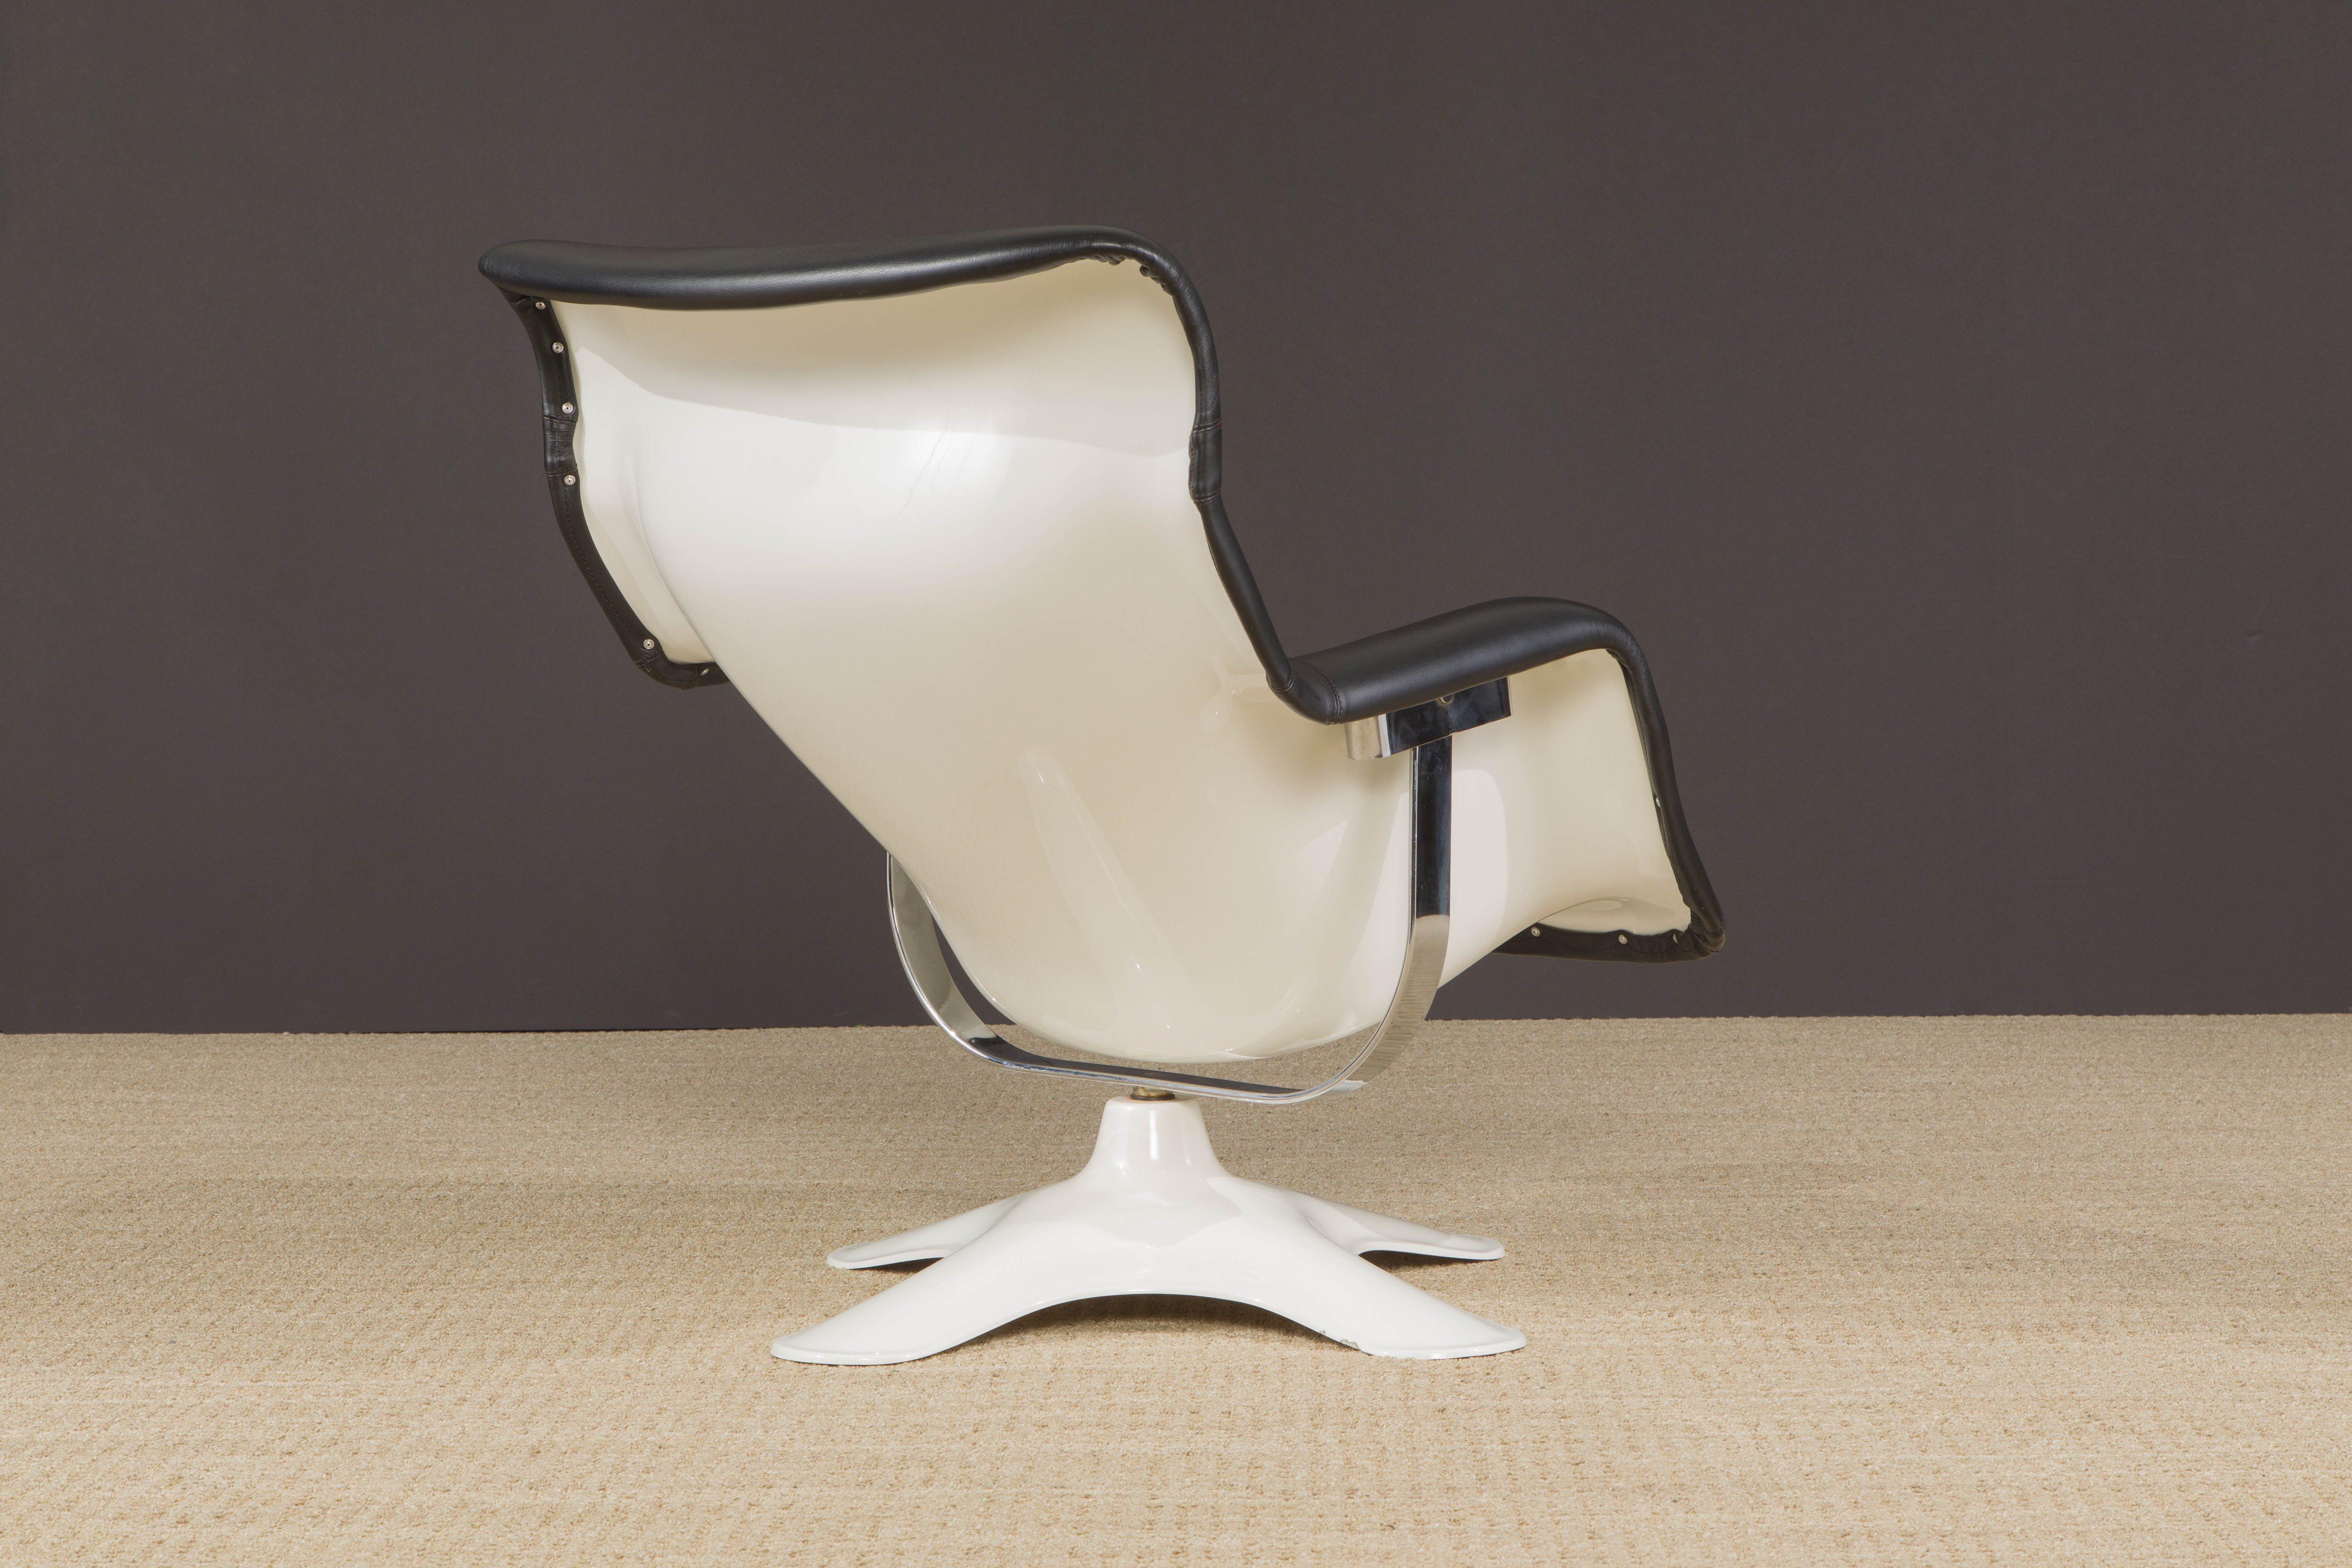 Contemporary Yrjö Kukkapuro for Artek 'Karuselli' Chair and Ottoman, Finland